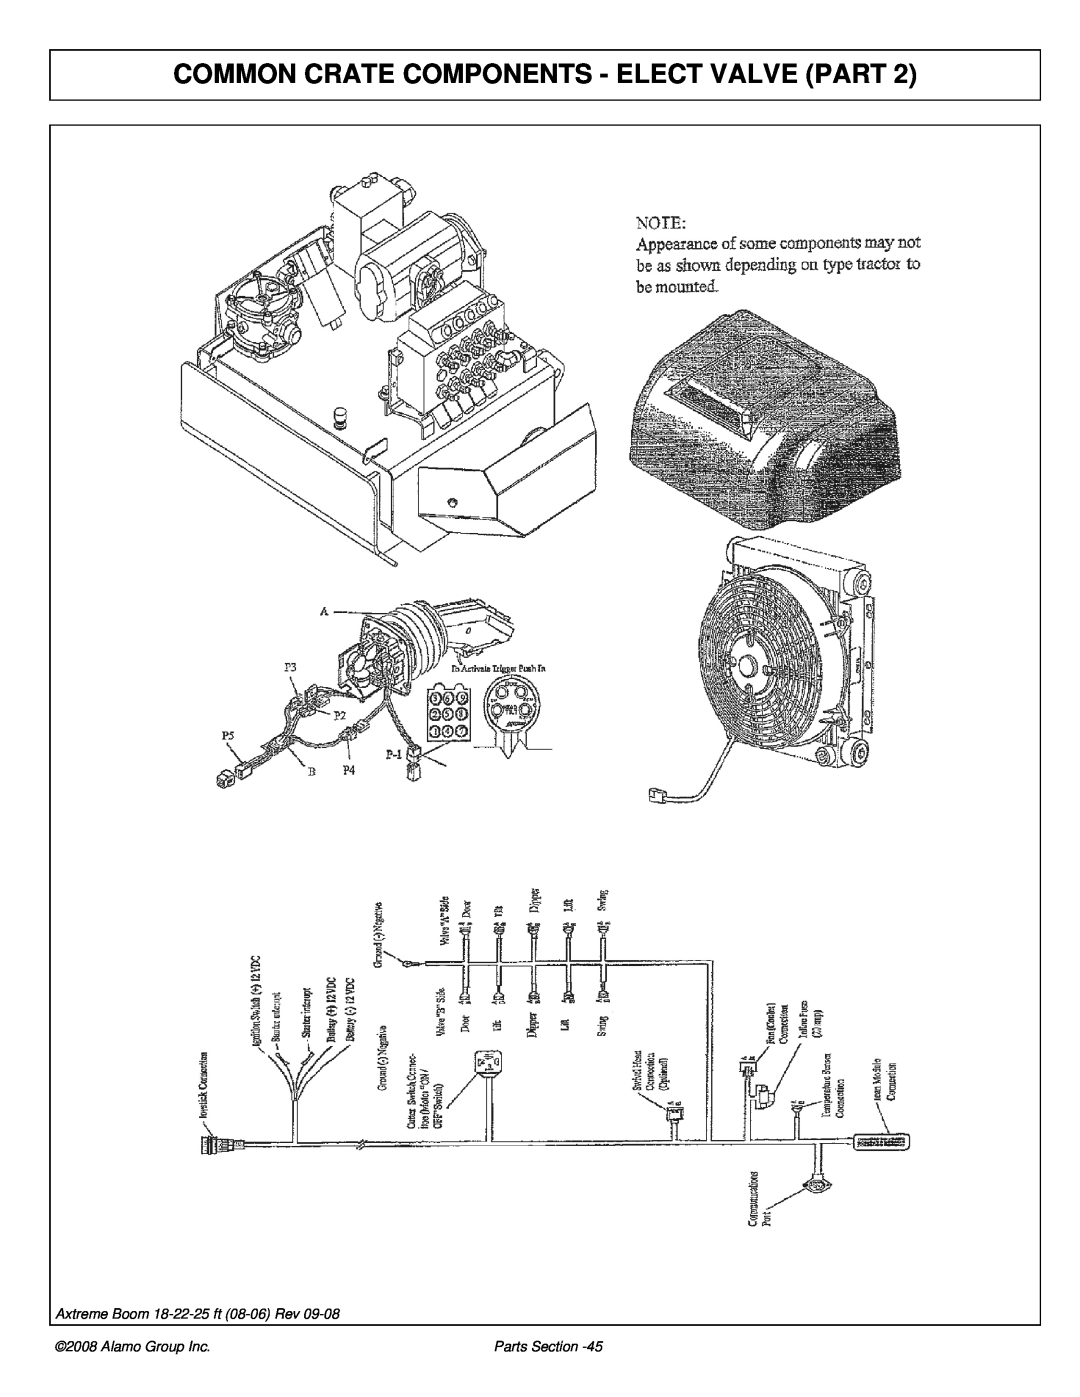 Alamo 02983326P manual Common Crate Components - Elect Valve Part, Axtreme Boom 18-22-25 ft 08-06 Rev, Alamo Group Inc 